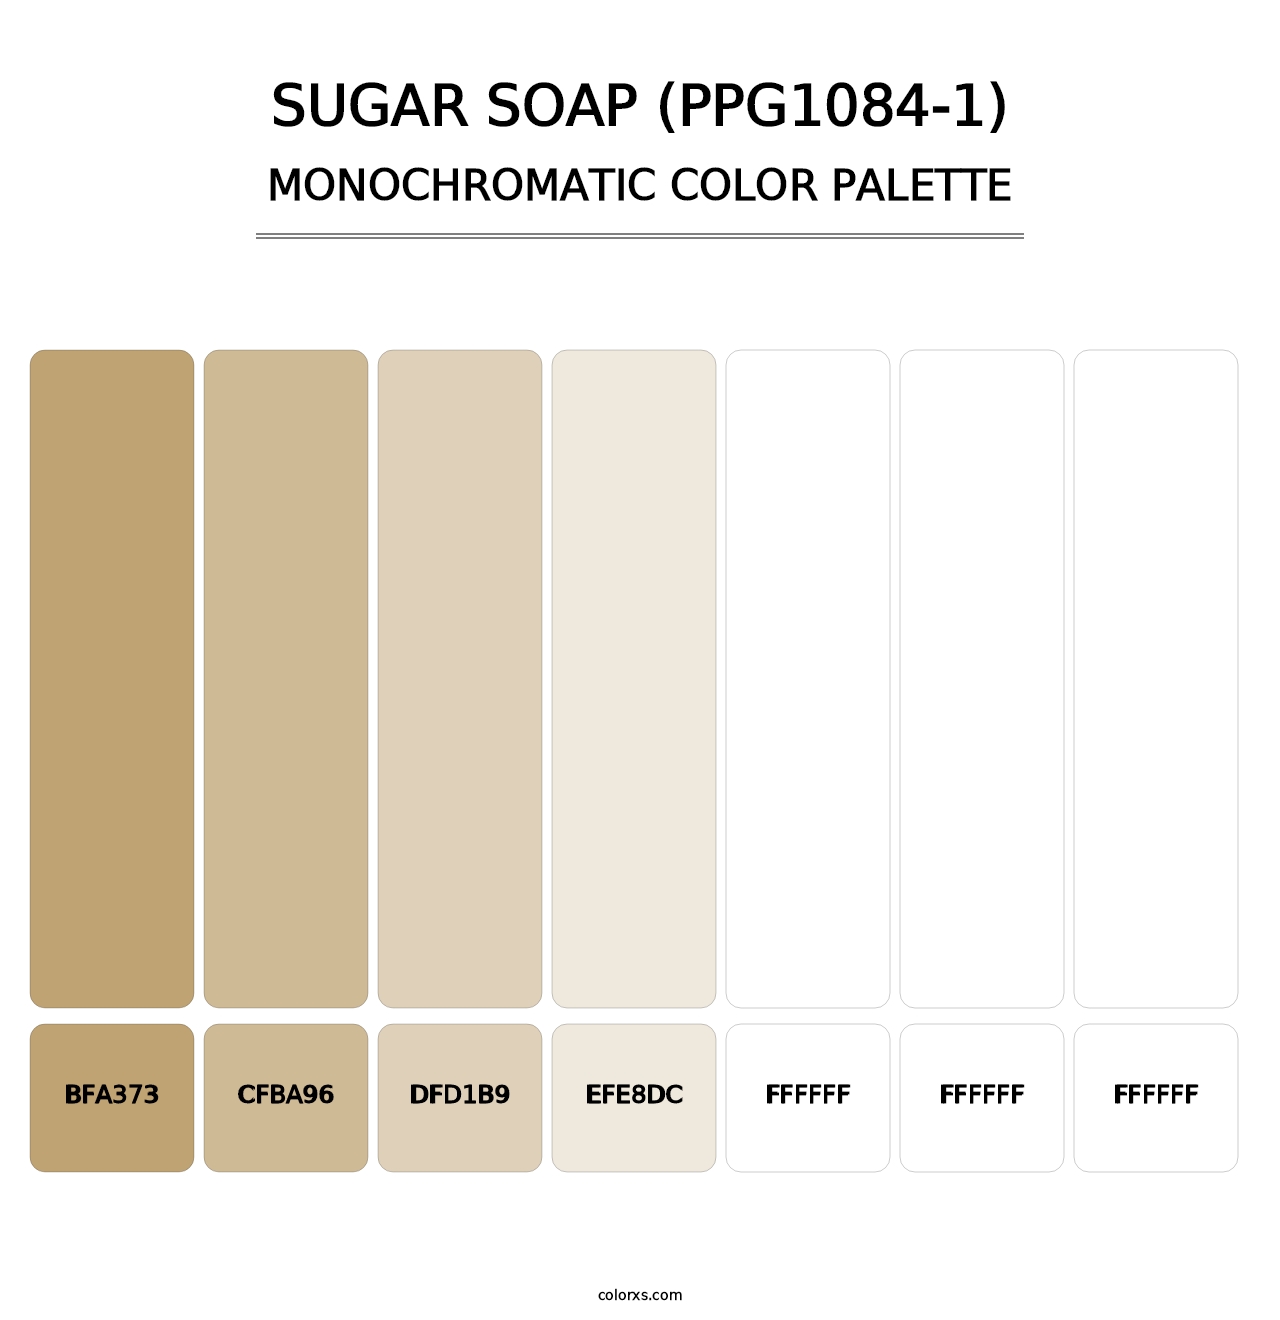 Sugar Soap (PPG1084-1) - Monochromatic Color Palette